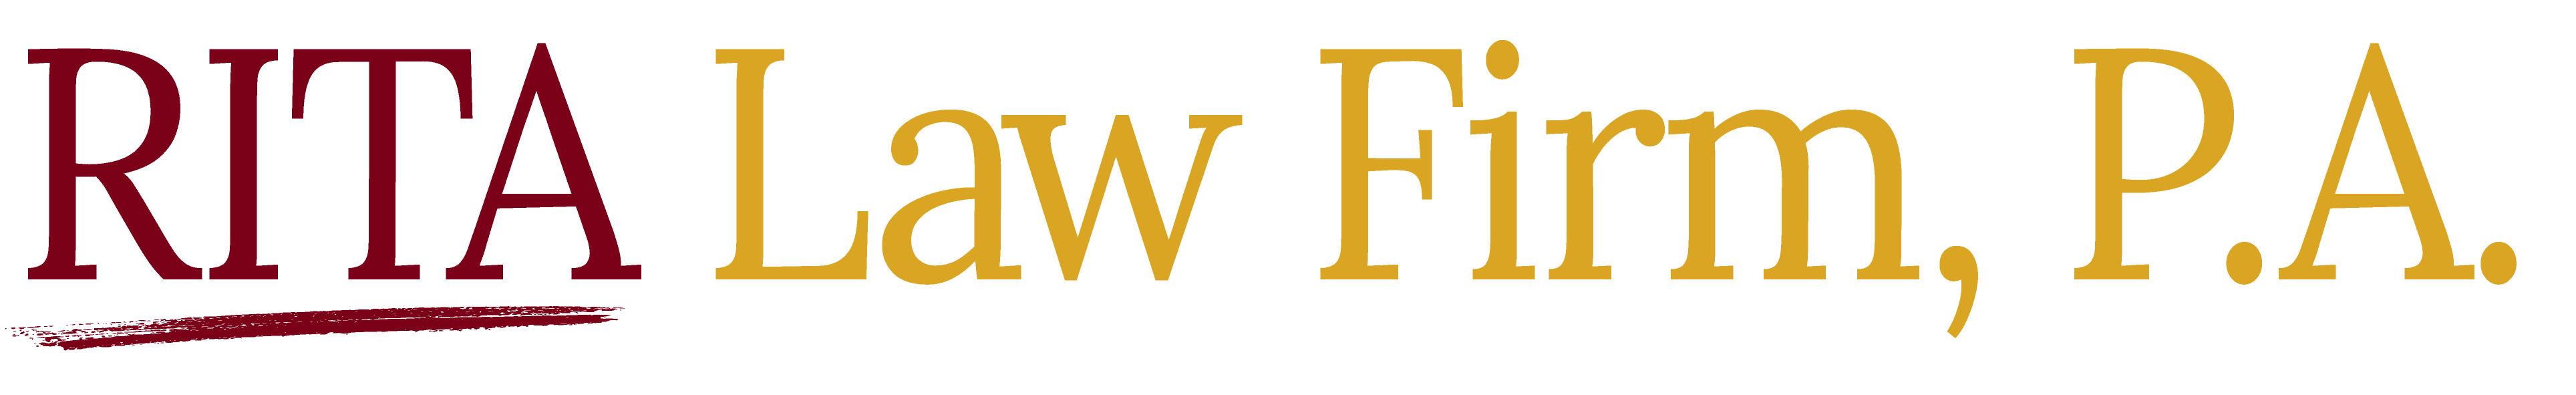 Rita Law Firm, P.A. logo